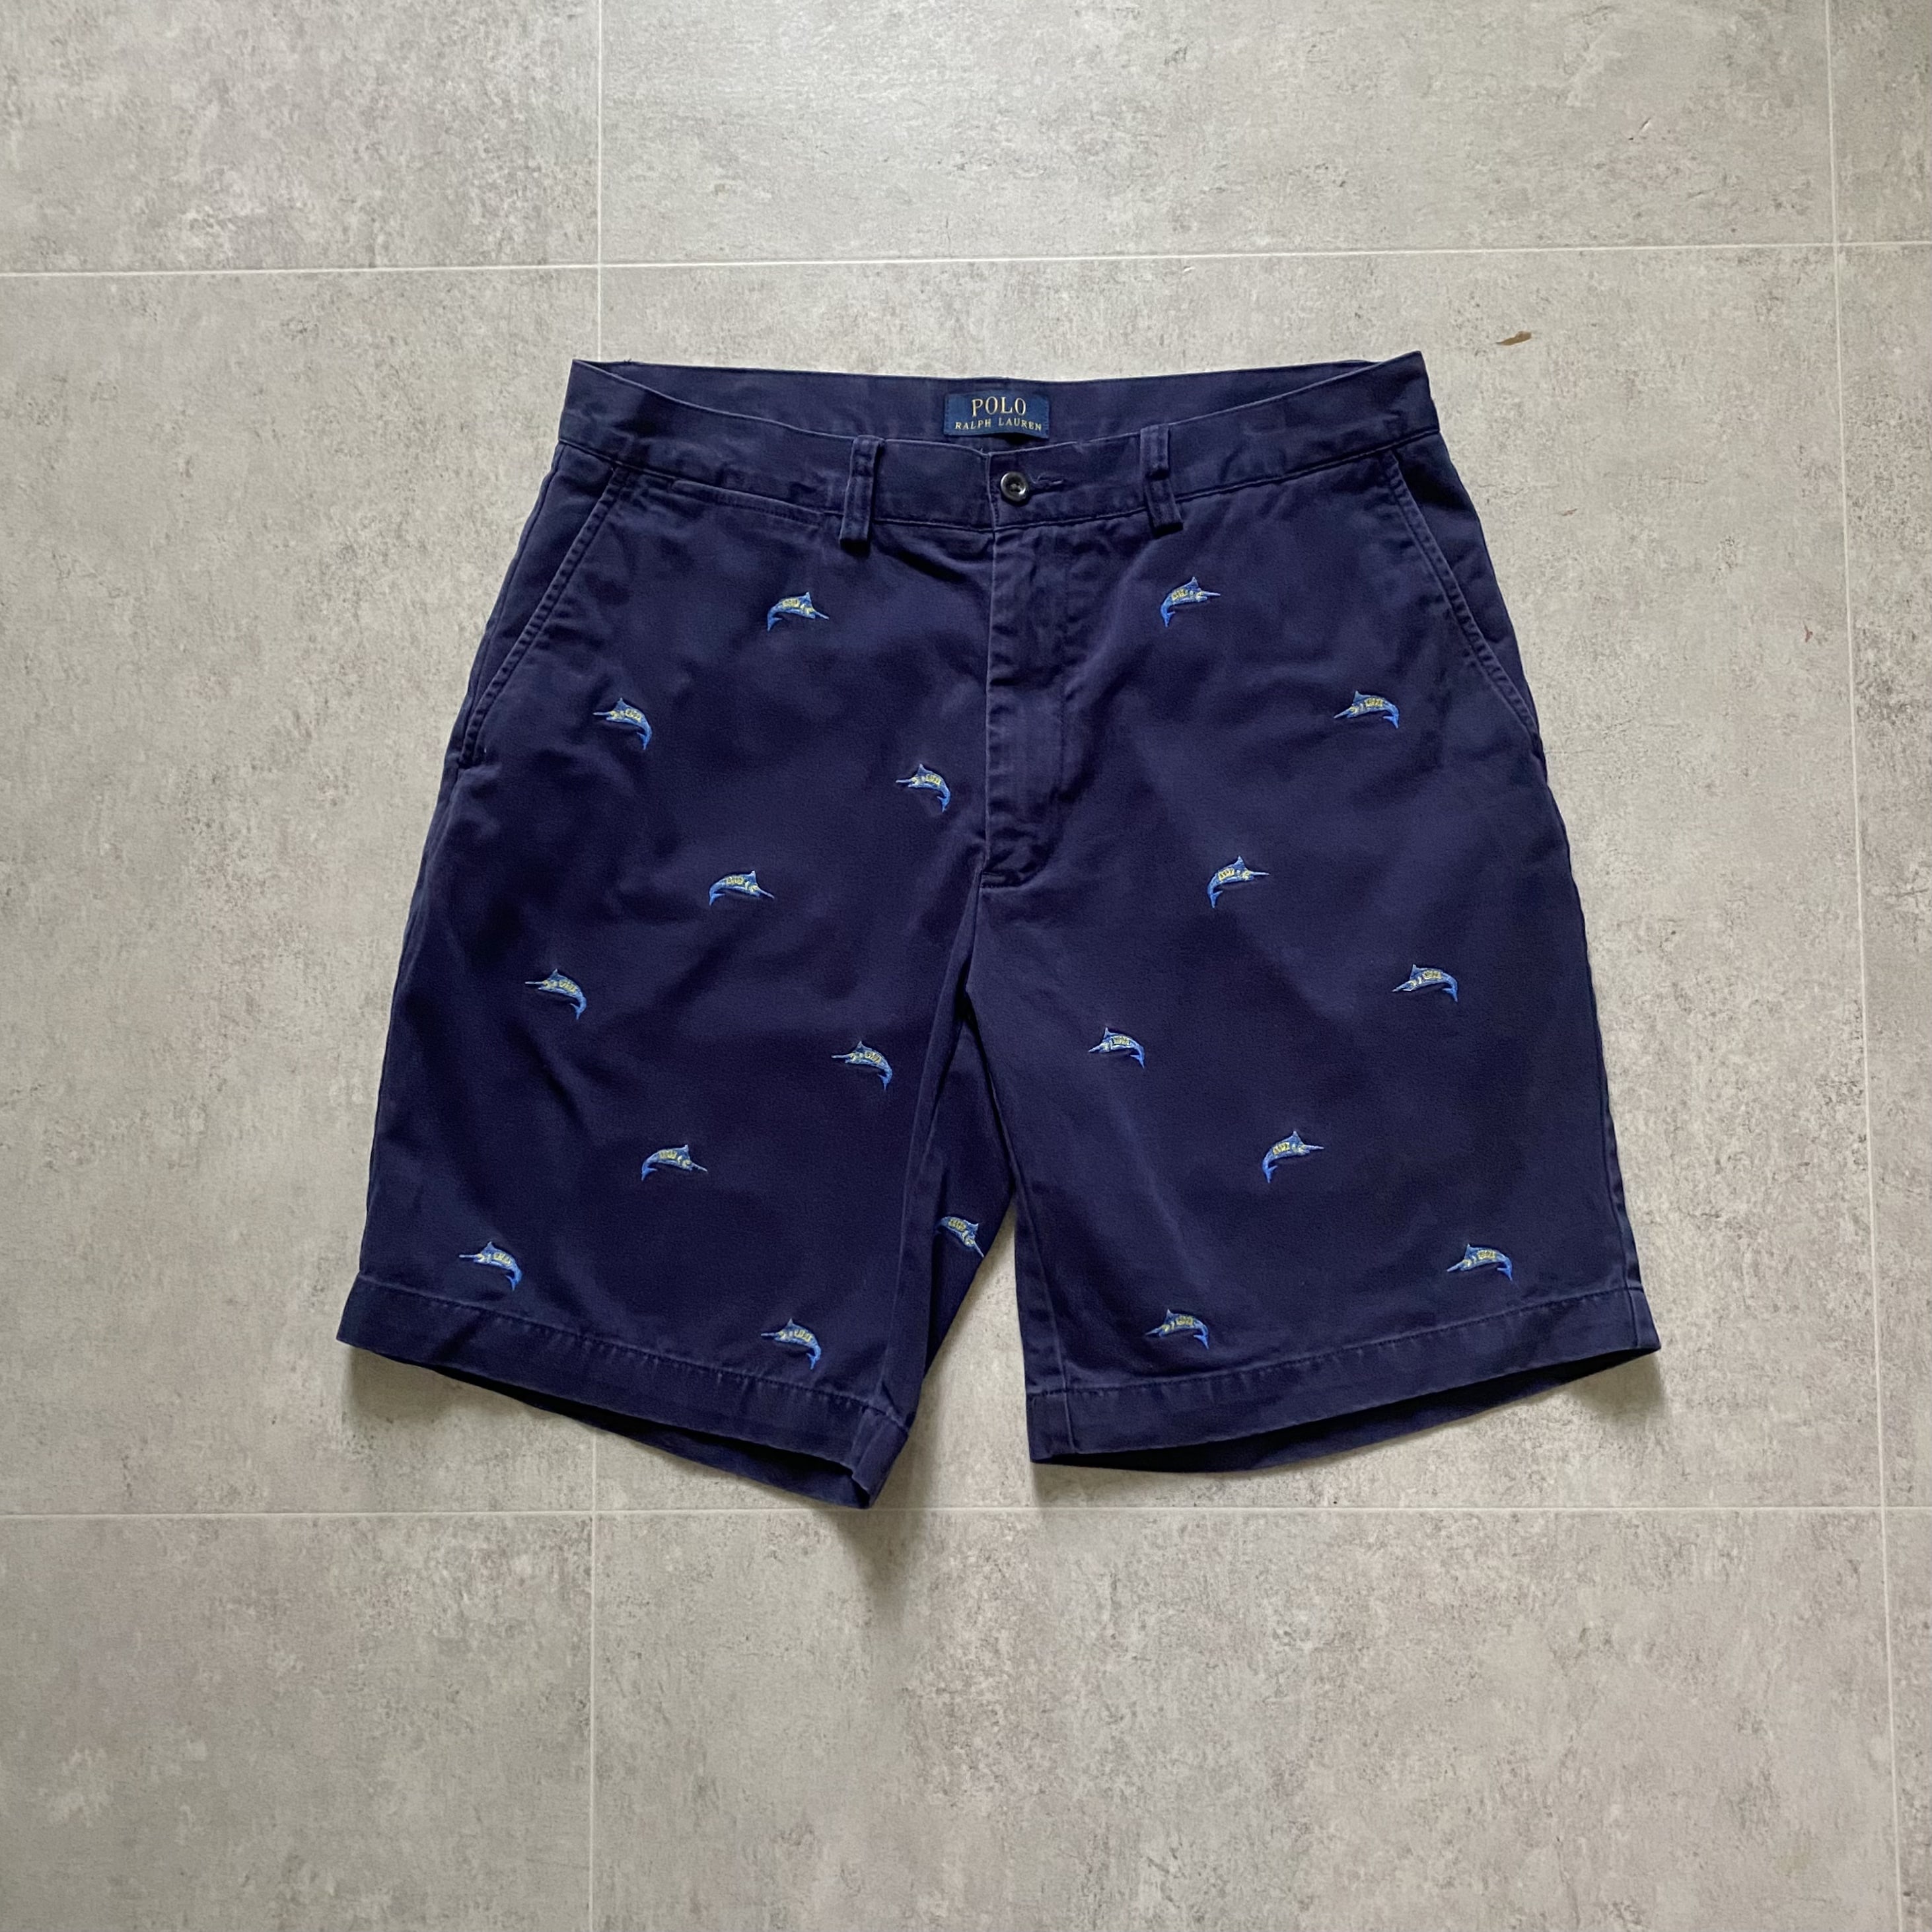 Polo Ralph Lauren Striped Marlin Embroidered Shorts 33 Size - 체리피커